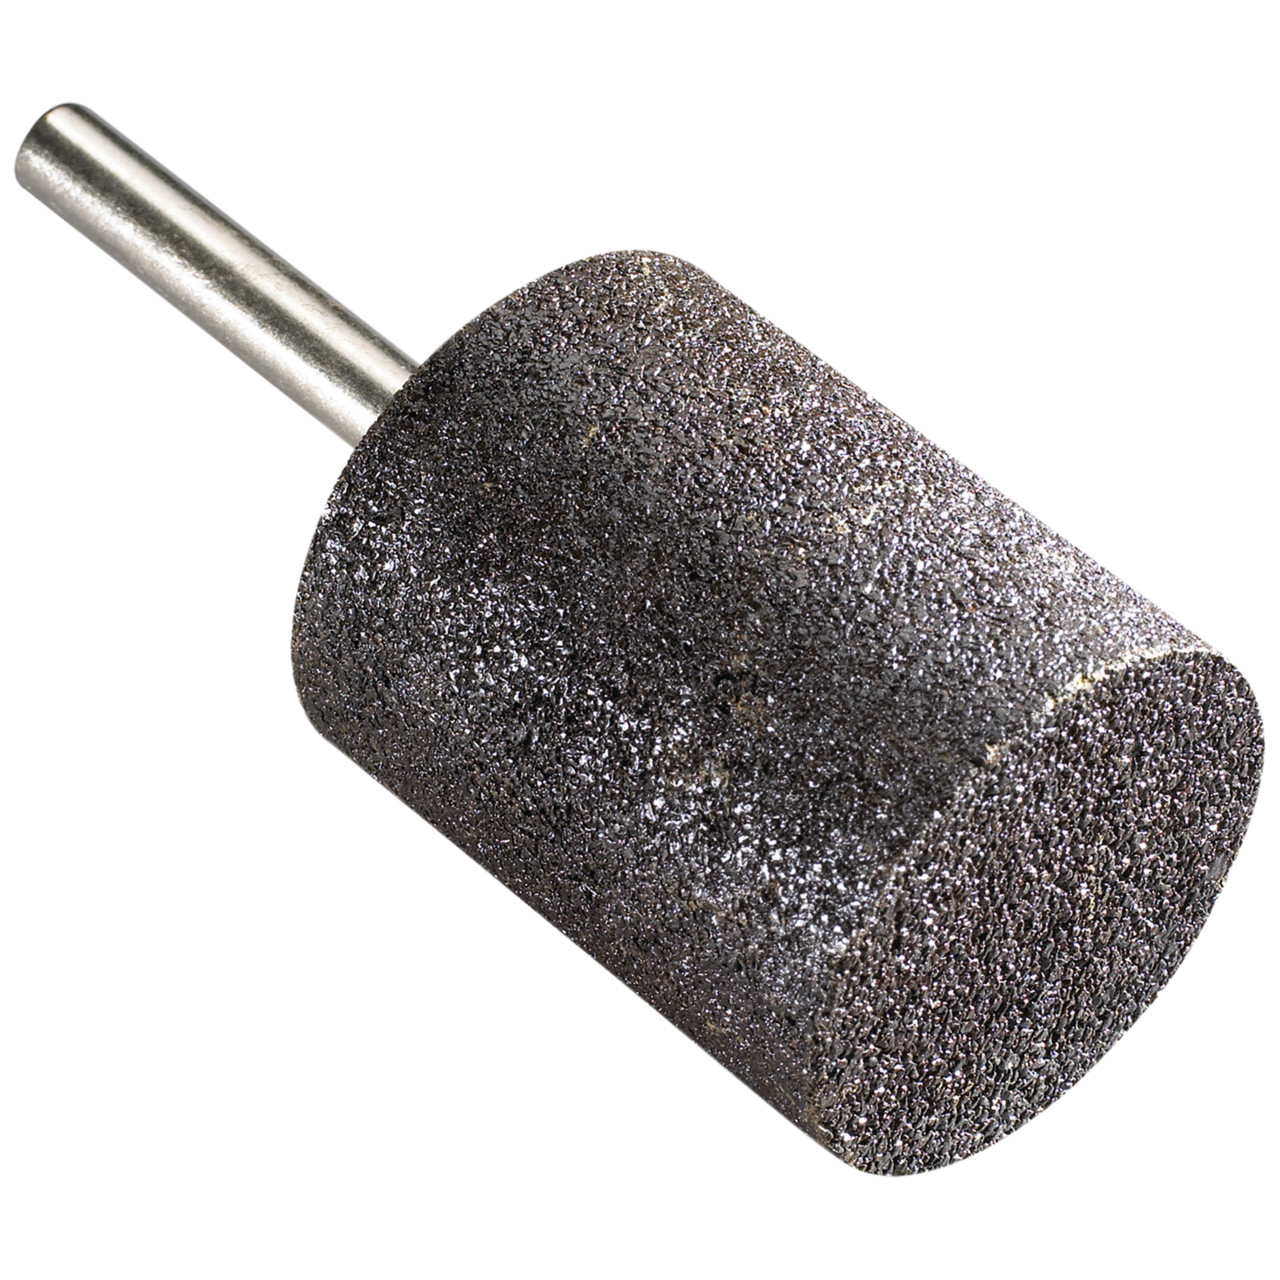 Tyrolit Punti montati in resina DxT-SxL 13x25-6x40 Per acciaio inox, forma: 52ZY - cilindro (punto montato), Art. 682104